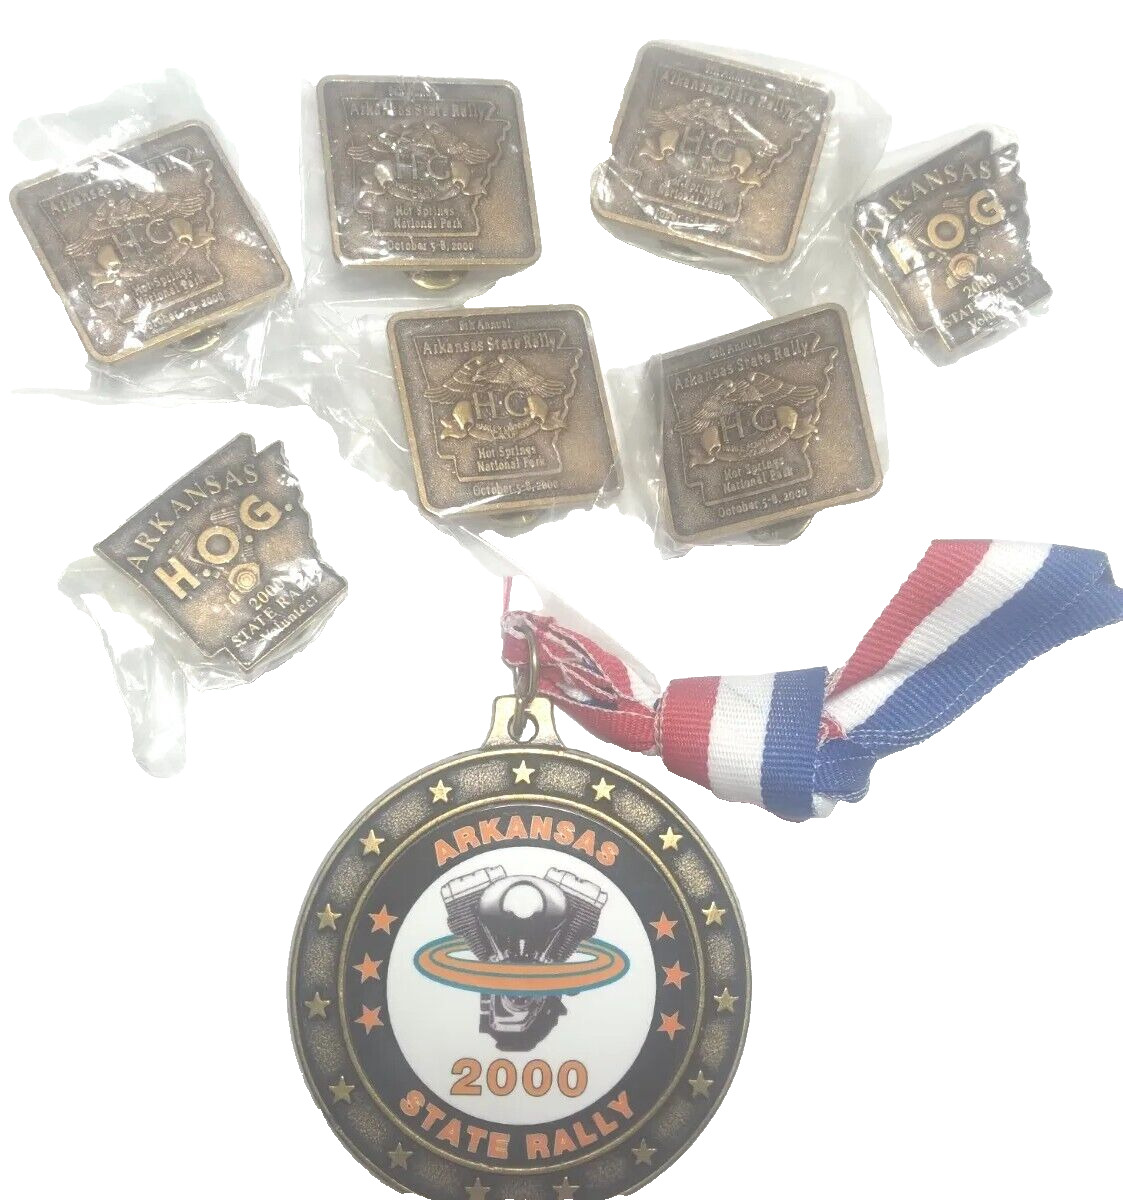 Harley Davidson Motorcycles Owners Group 2000 Arkansas Rally 7 Pins 1 Medal 